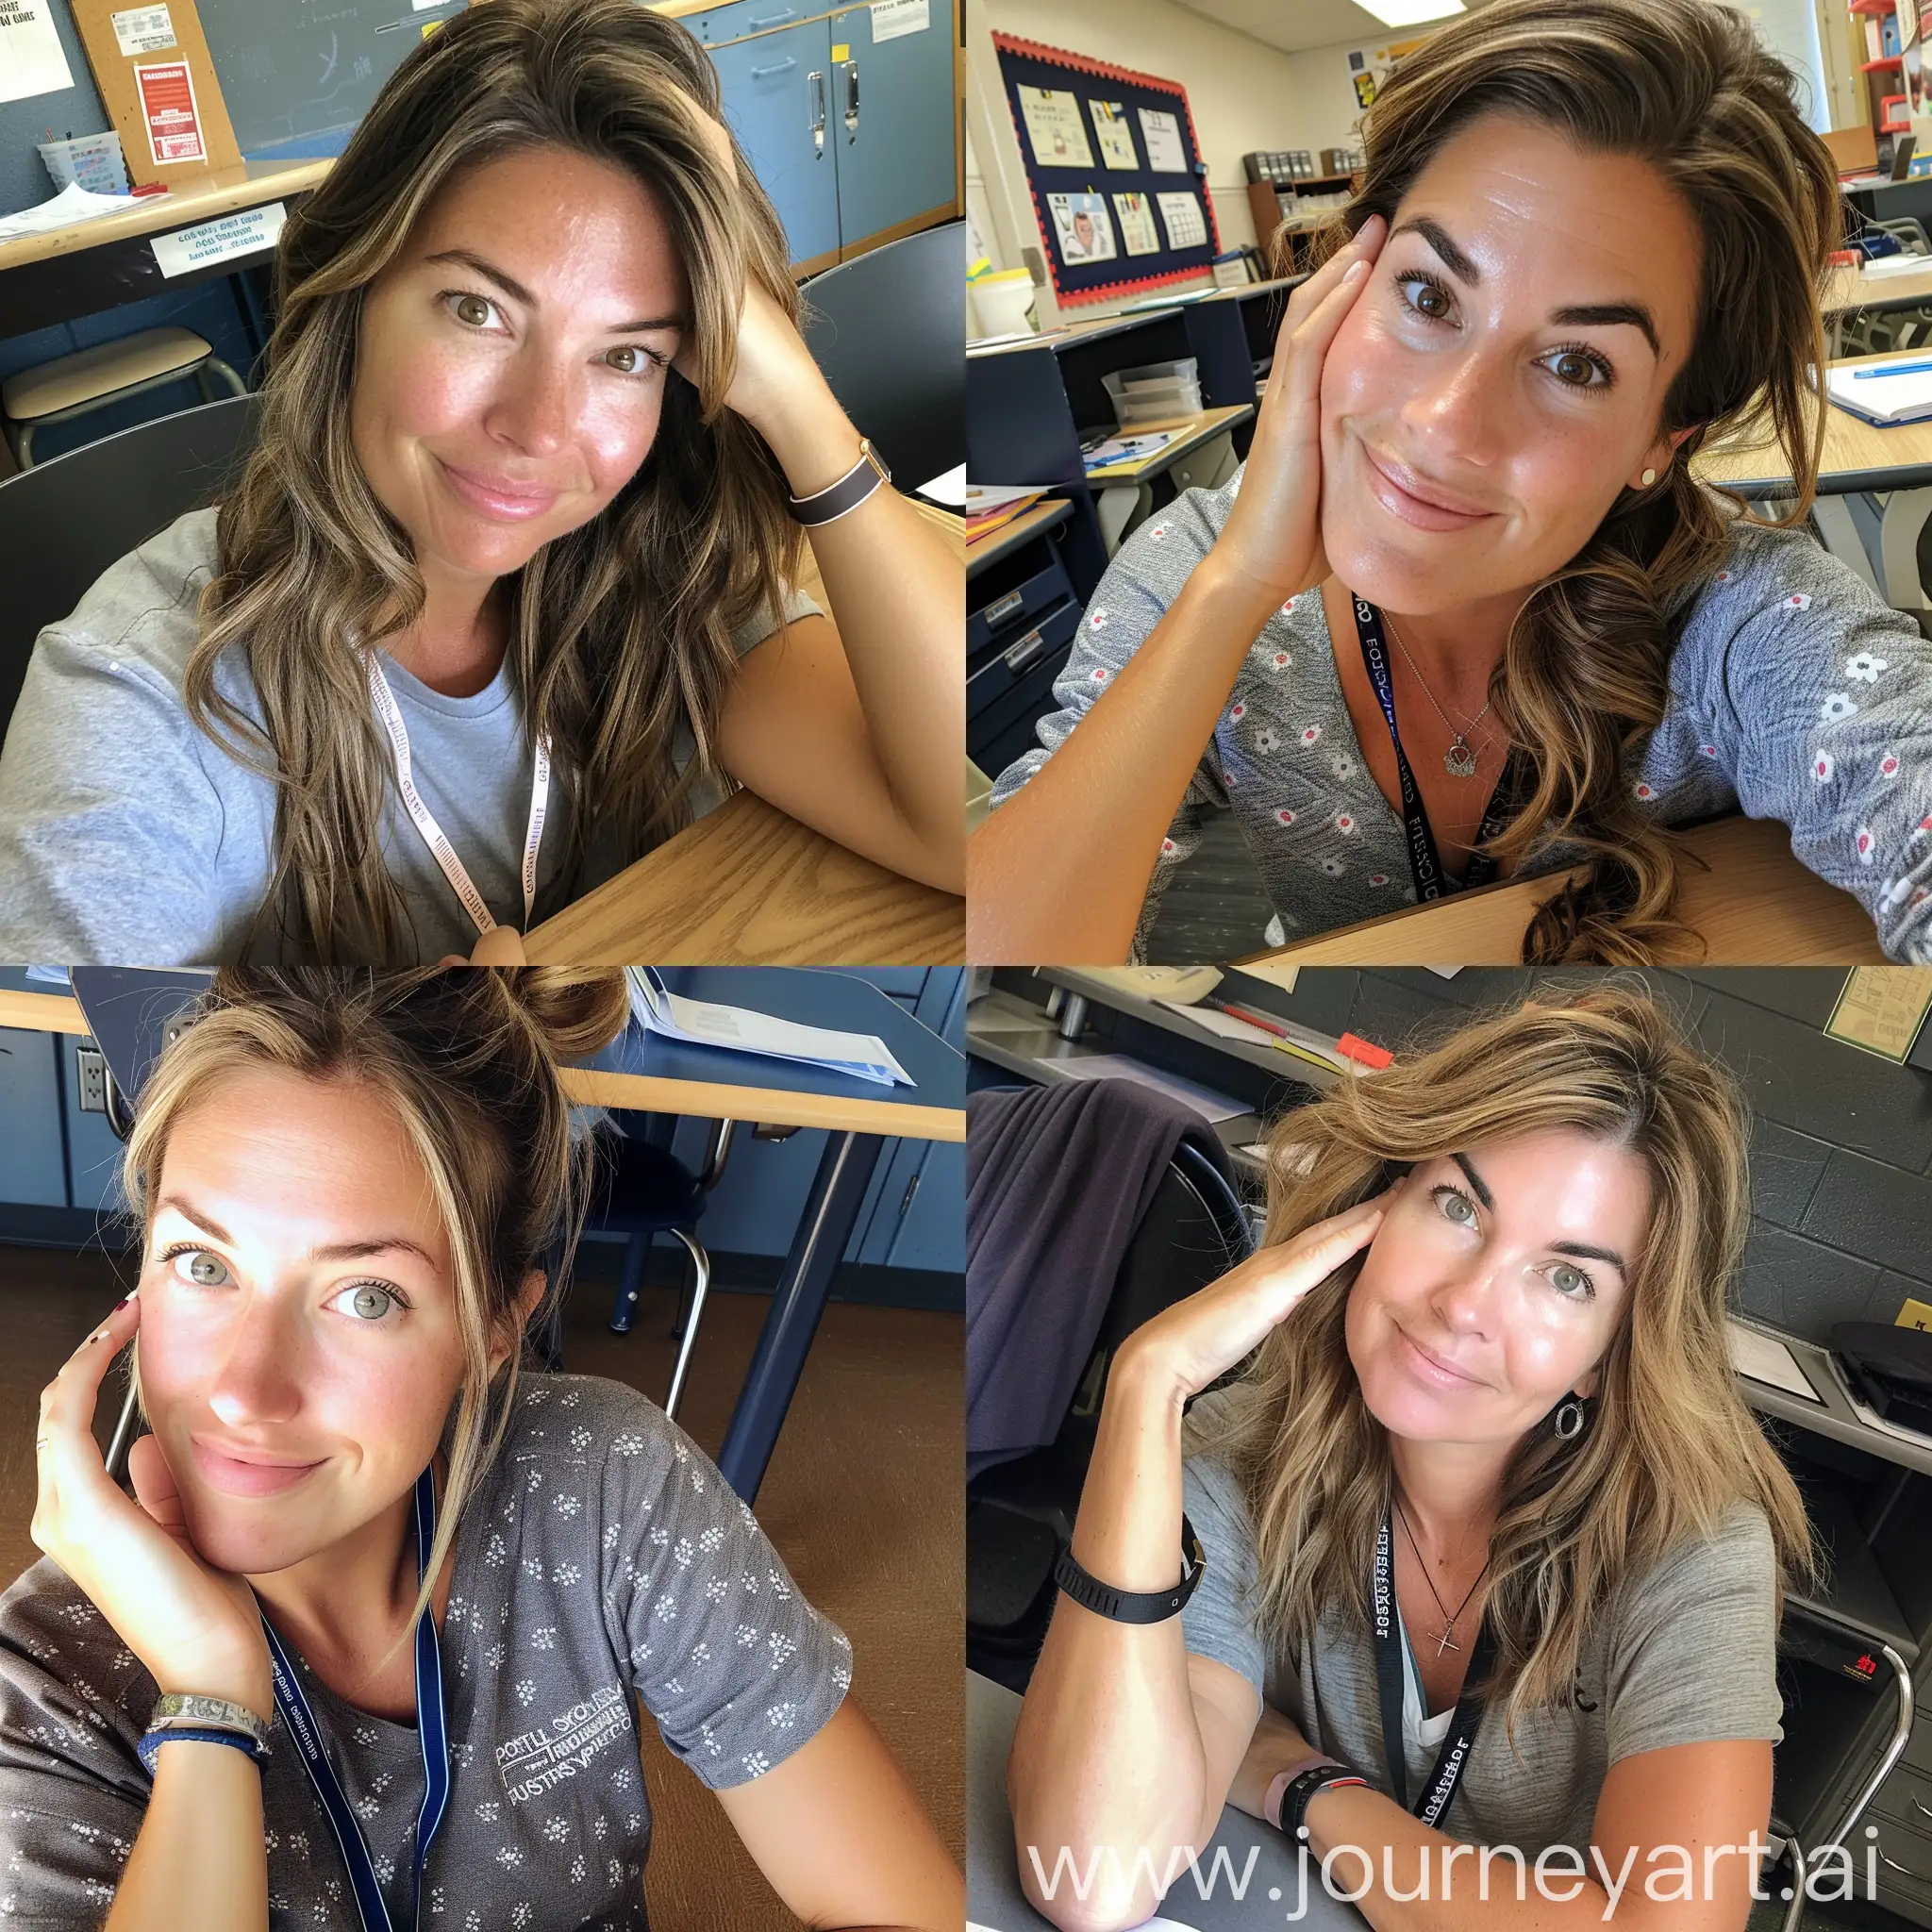 Friendly-Elementary-Teacher-Capturing-Casual-Selfie-Moment-at-Desk